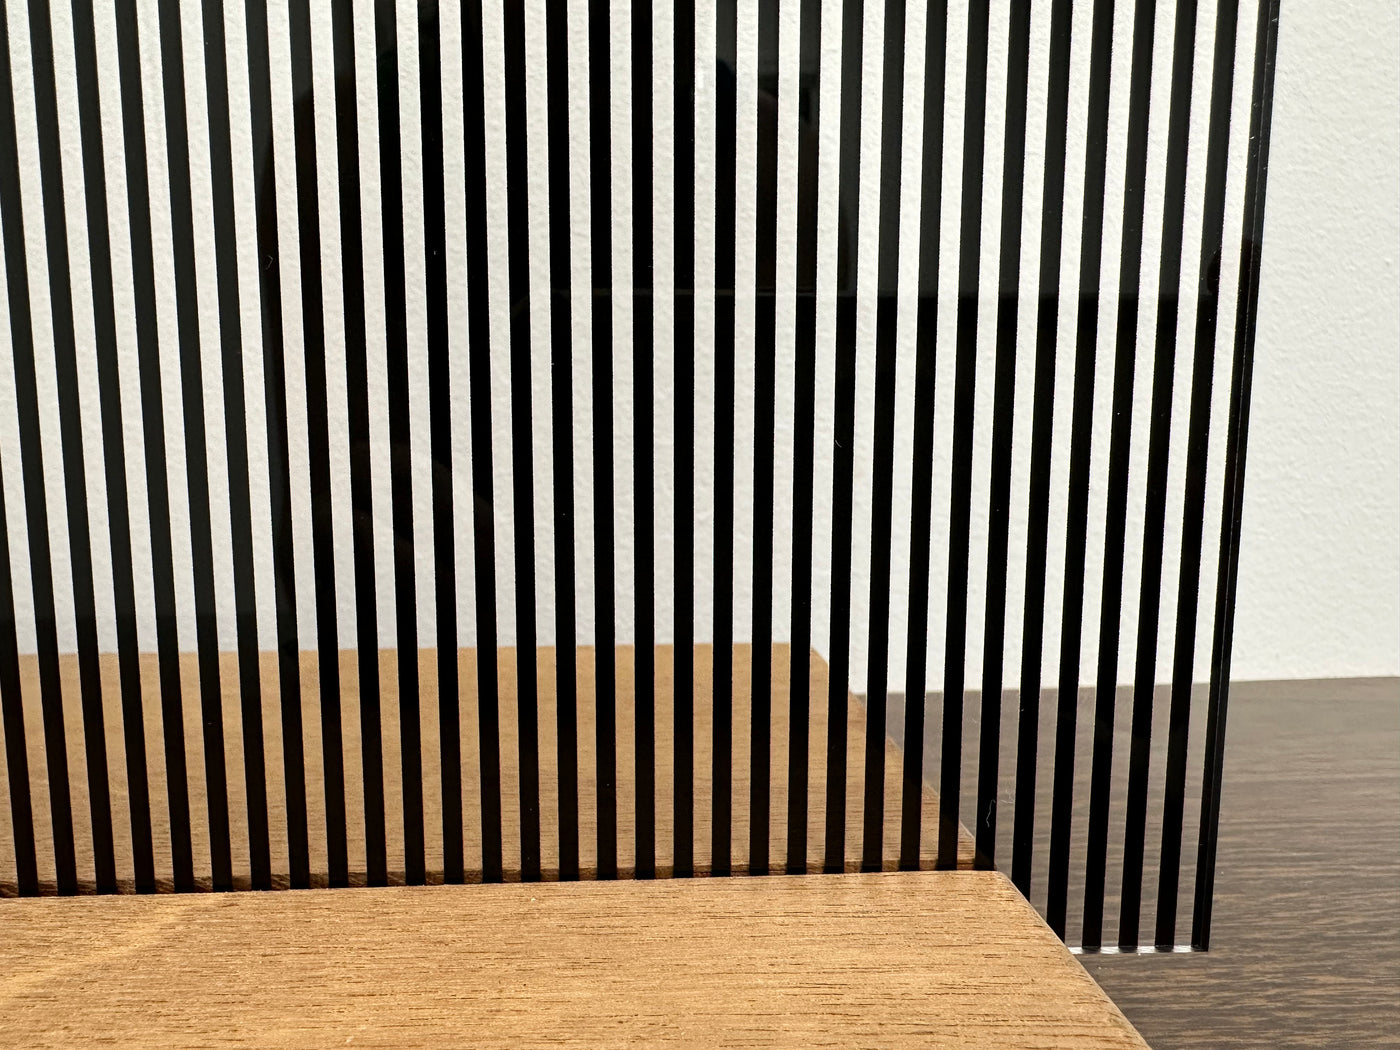 PatternPly® Scattered Black Vertical Stripes